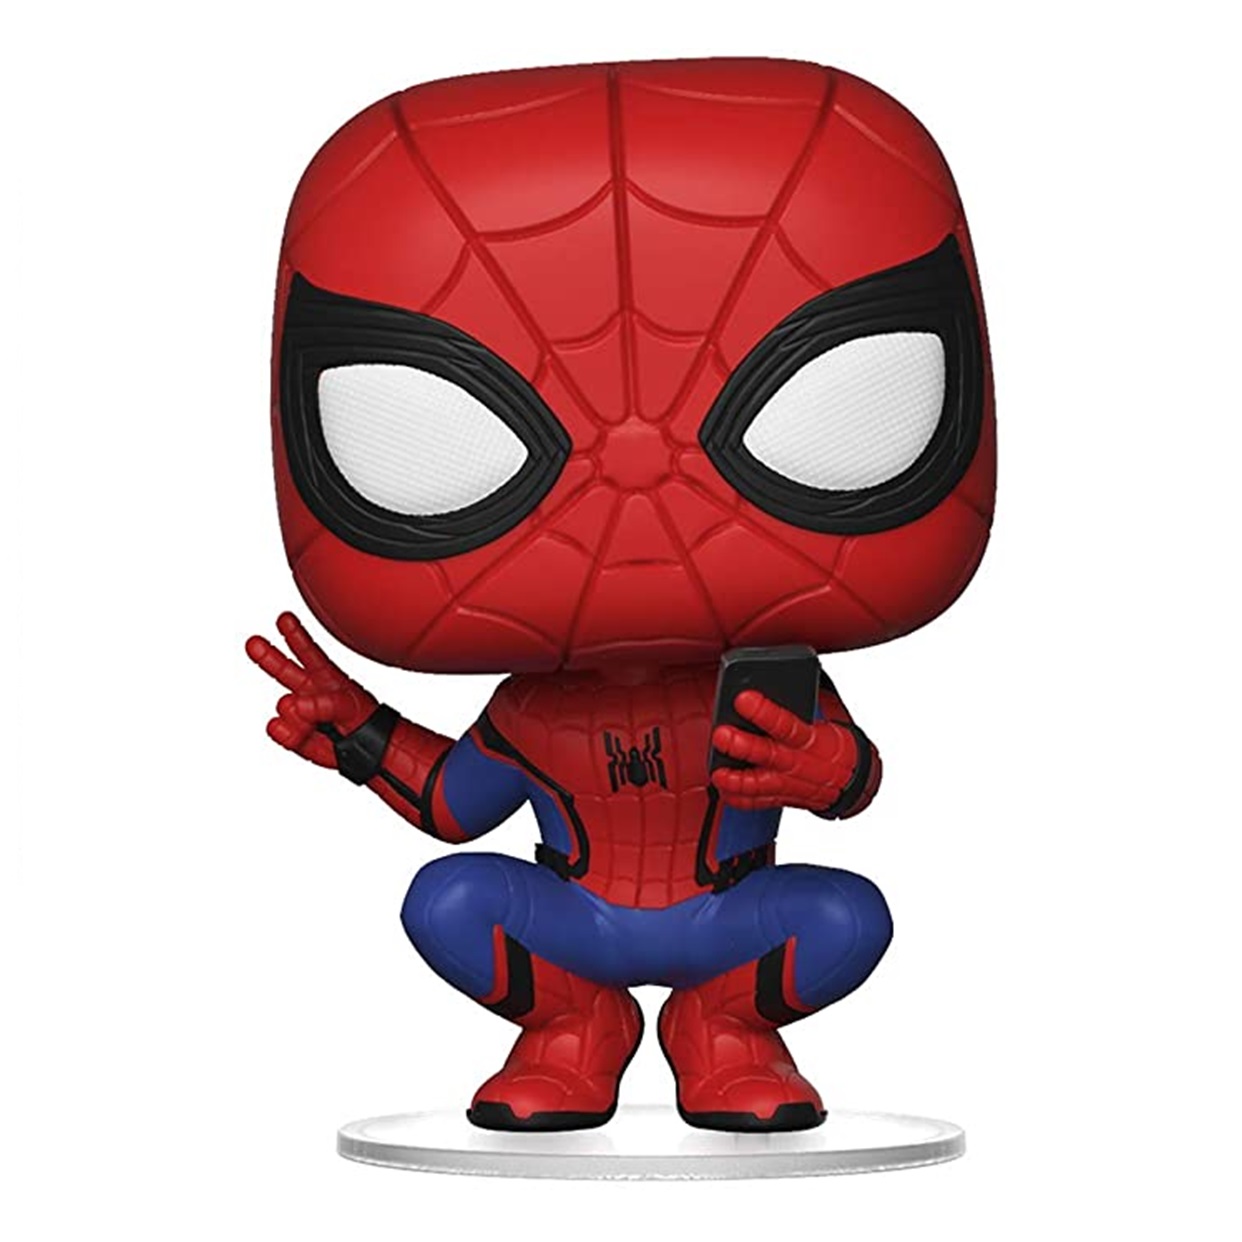 Spider Man #468 (hero Suit) Figura Funko Pop! Far From Home